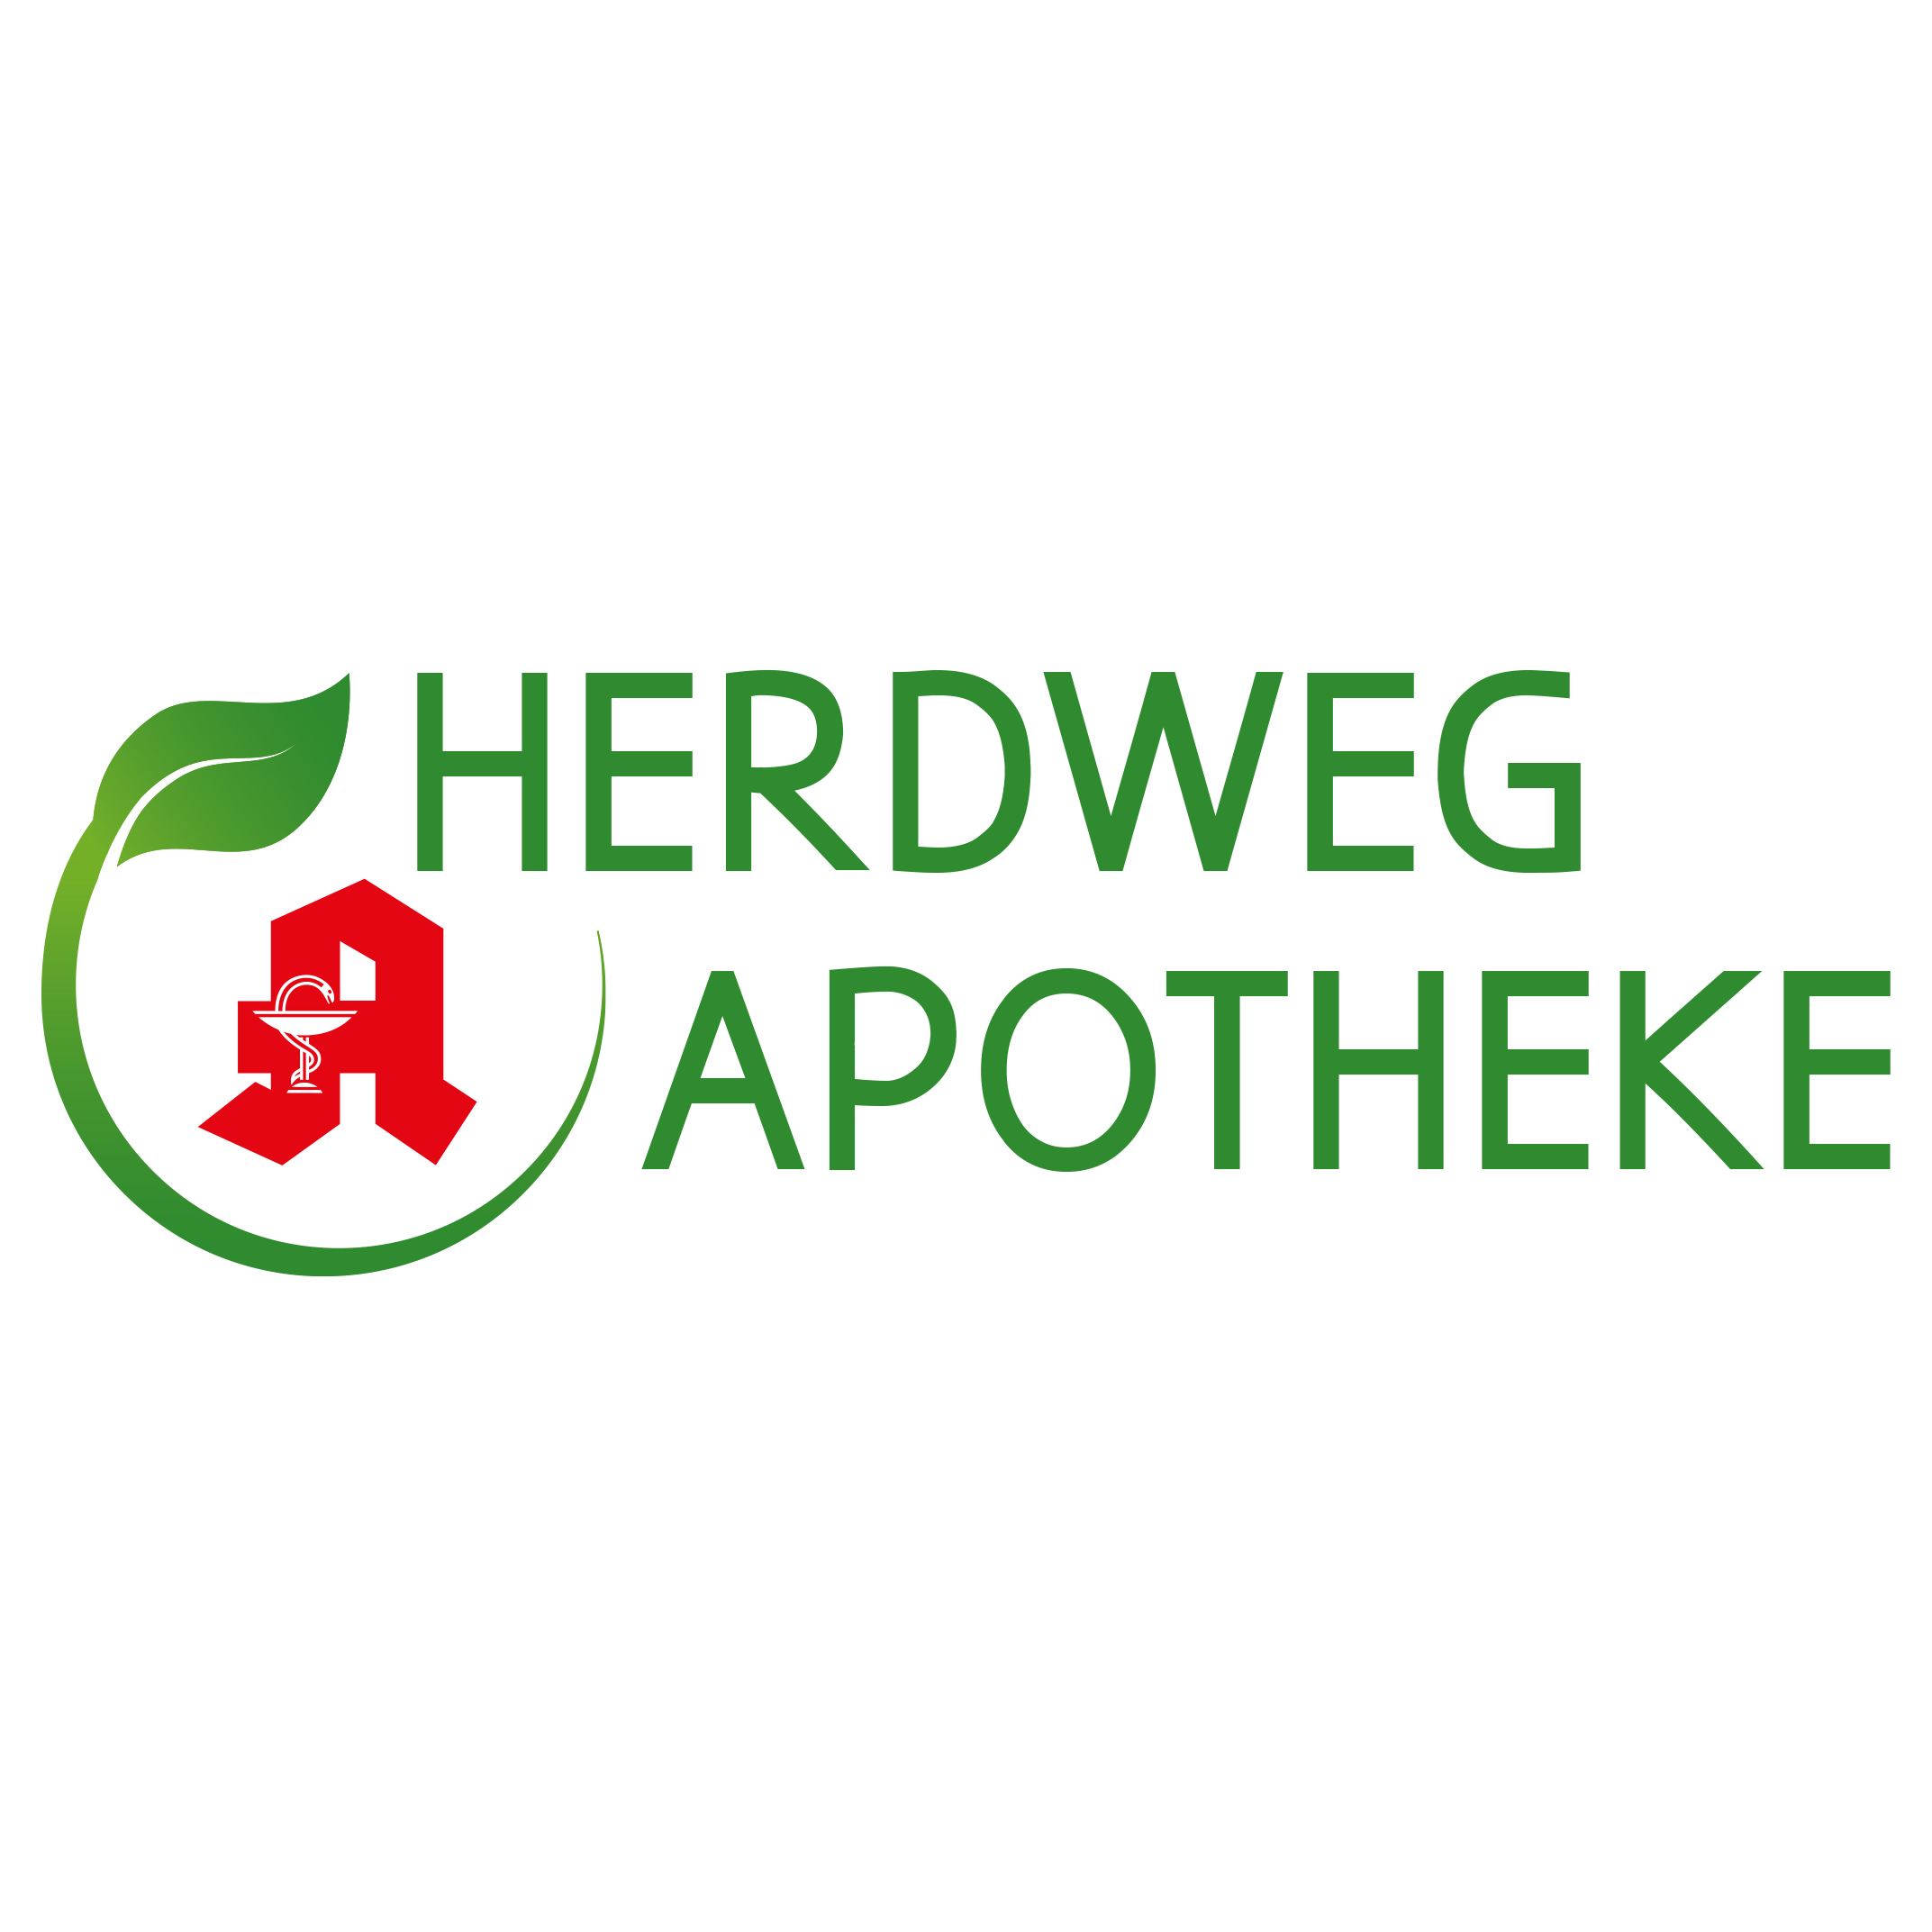 Herdweg-Apotheke in Stuttgart - Logo